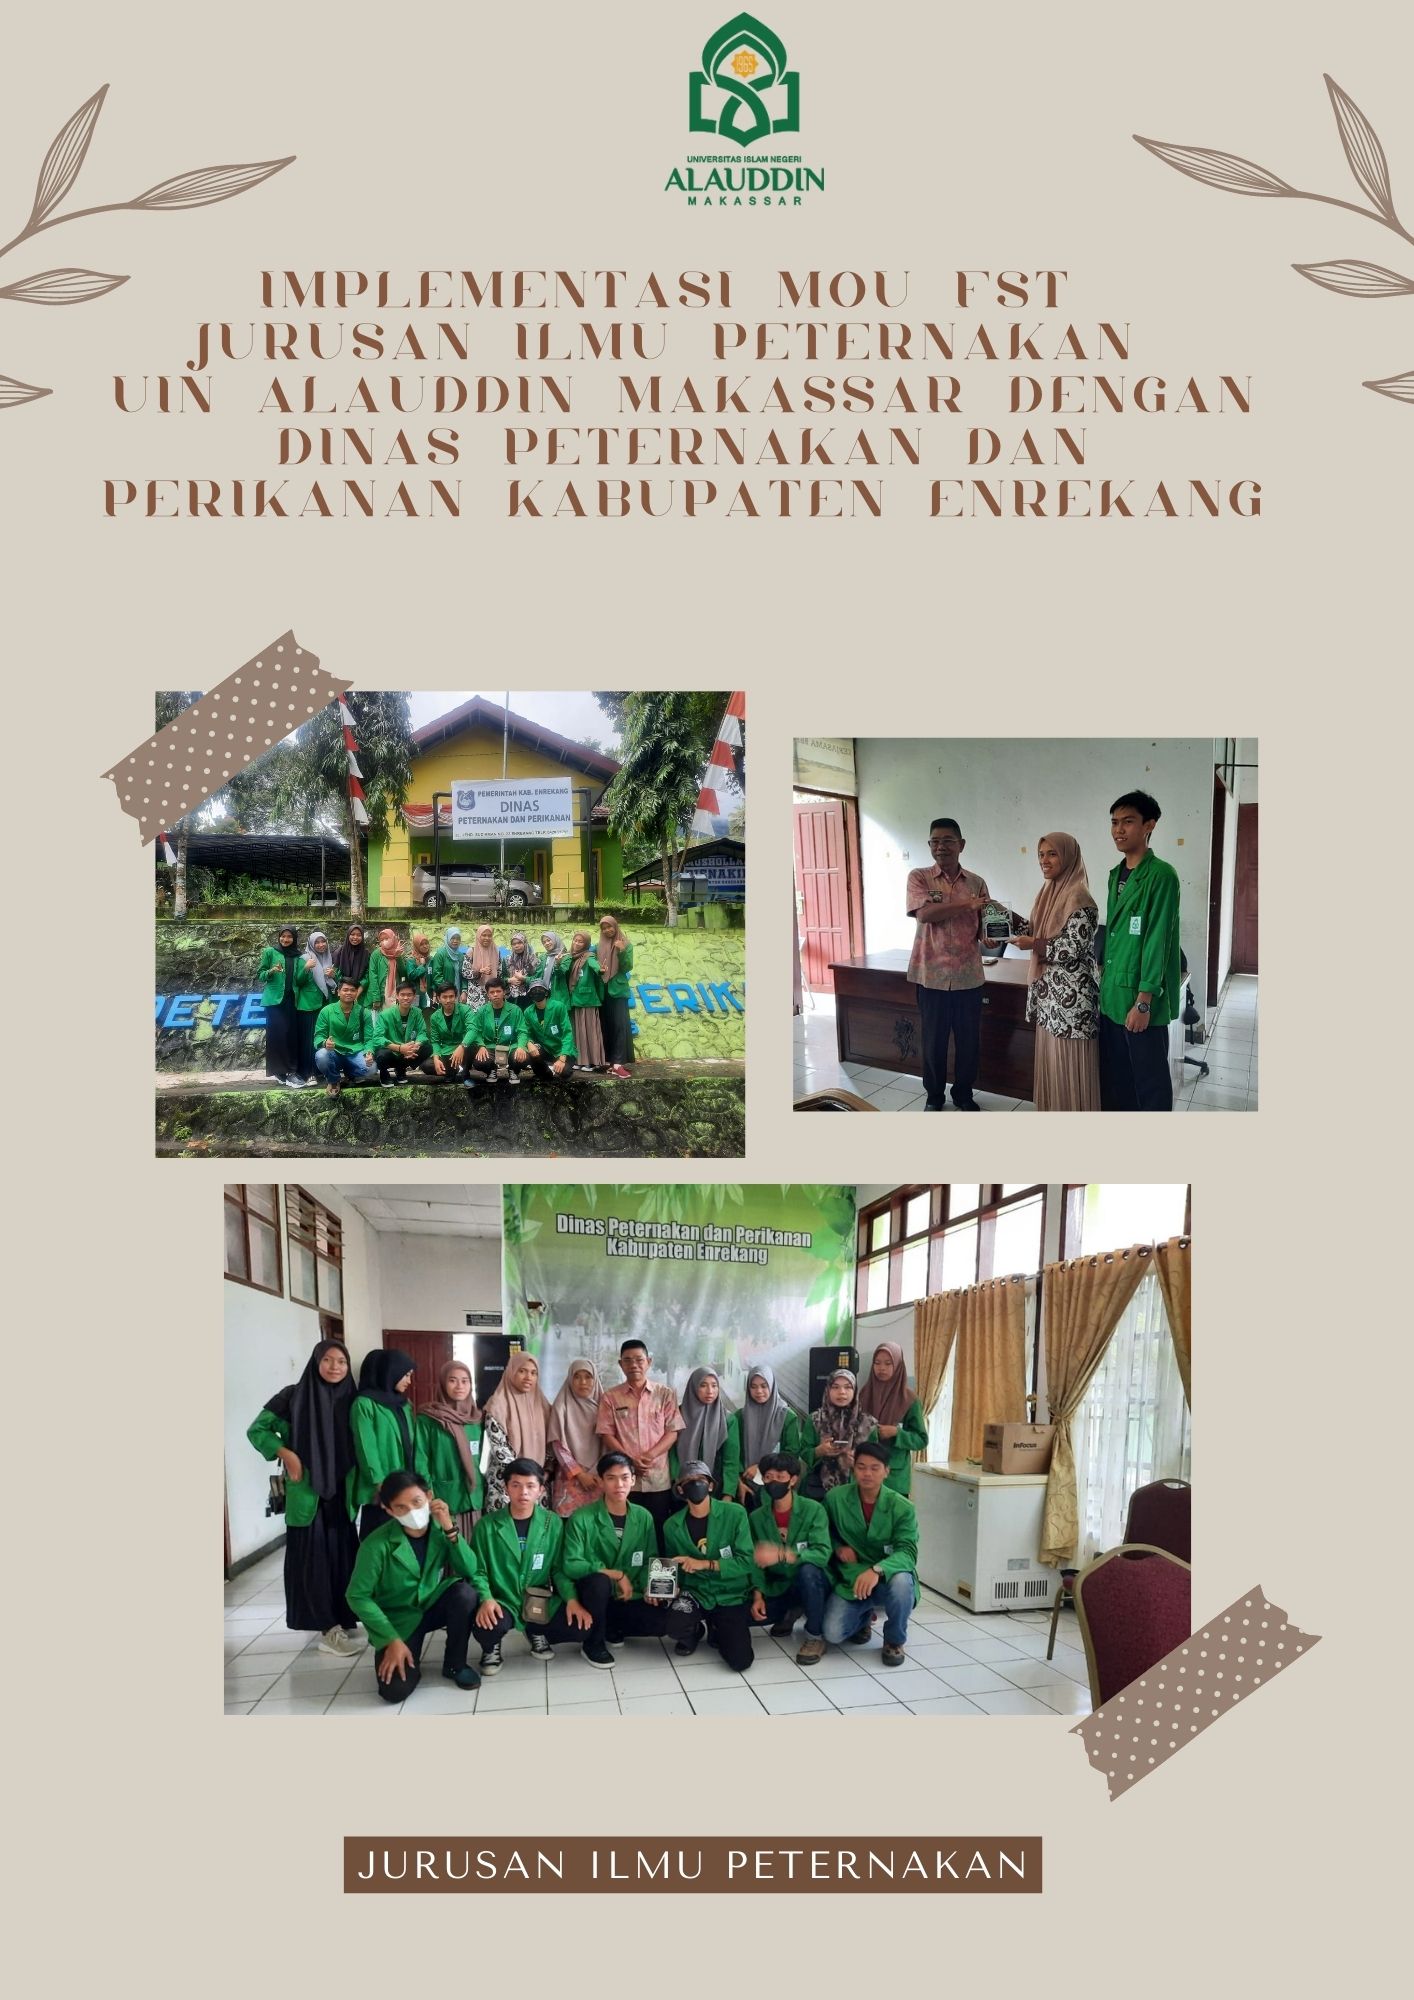 Implementasi MoU FST Jurusan Ilmu Peternakan UIN Alauddin Makassar dengan Dinas Peternakan dan Perikanan Kabupaten Enrekang